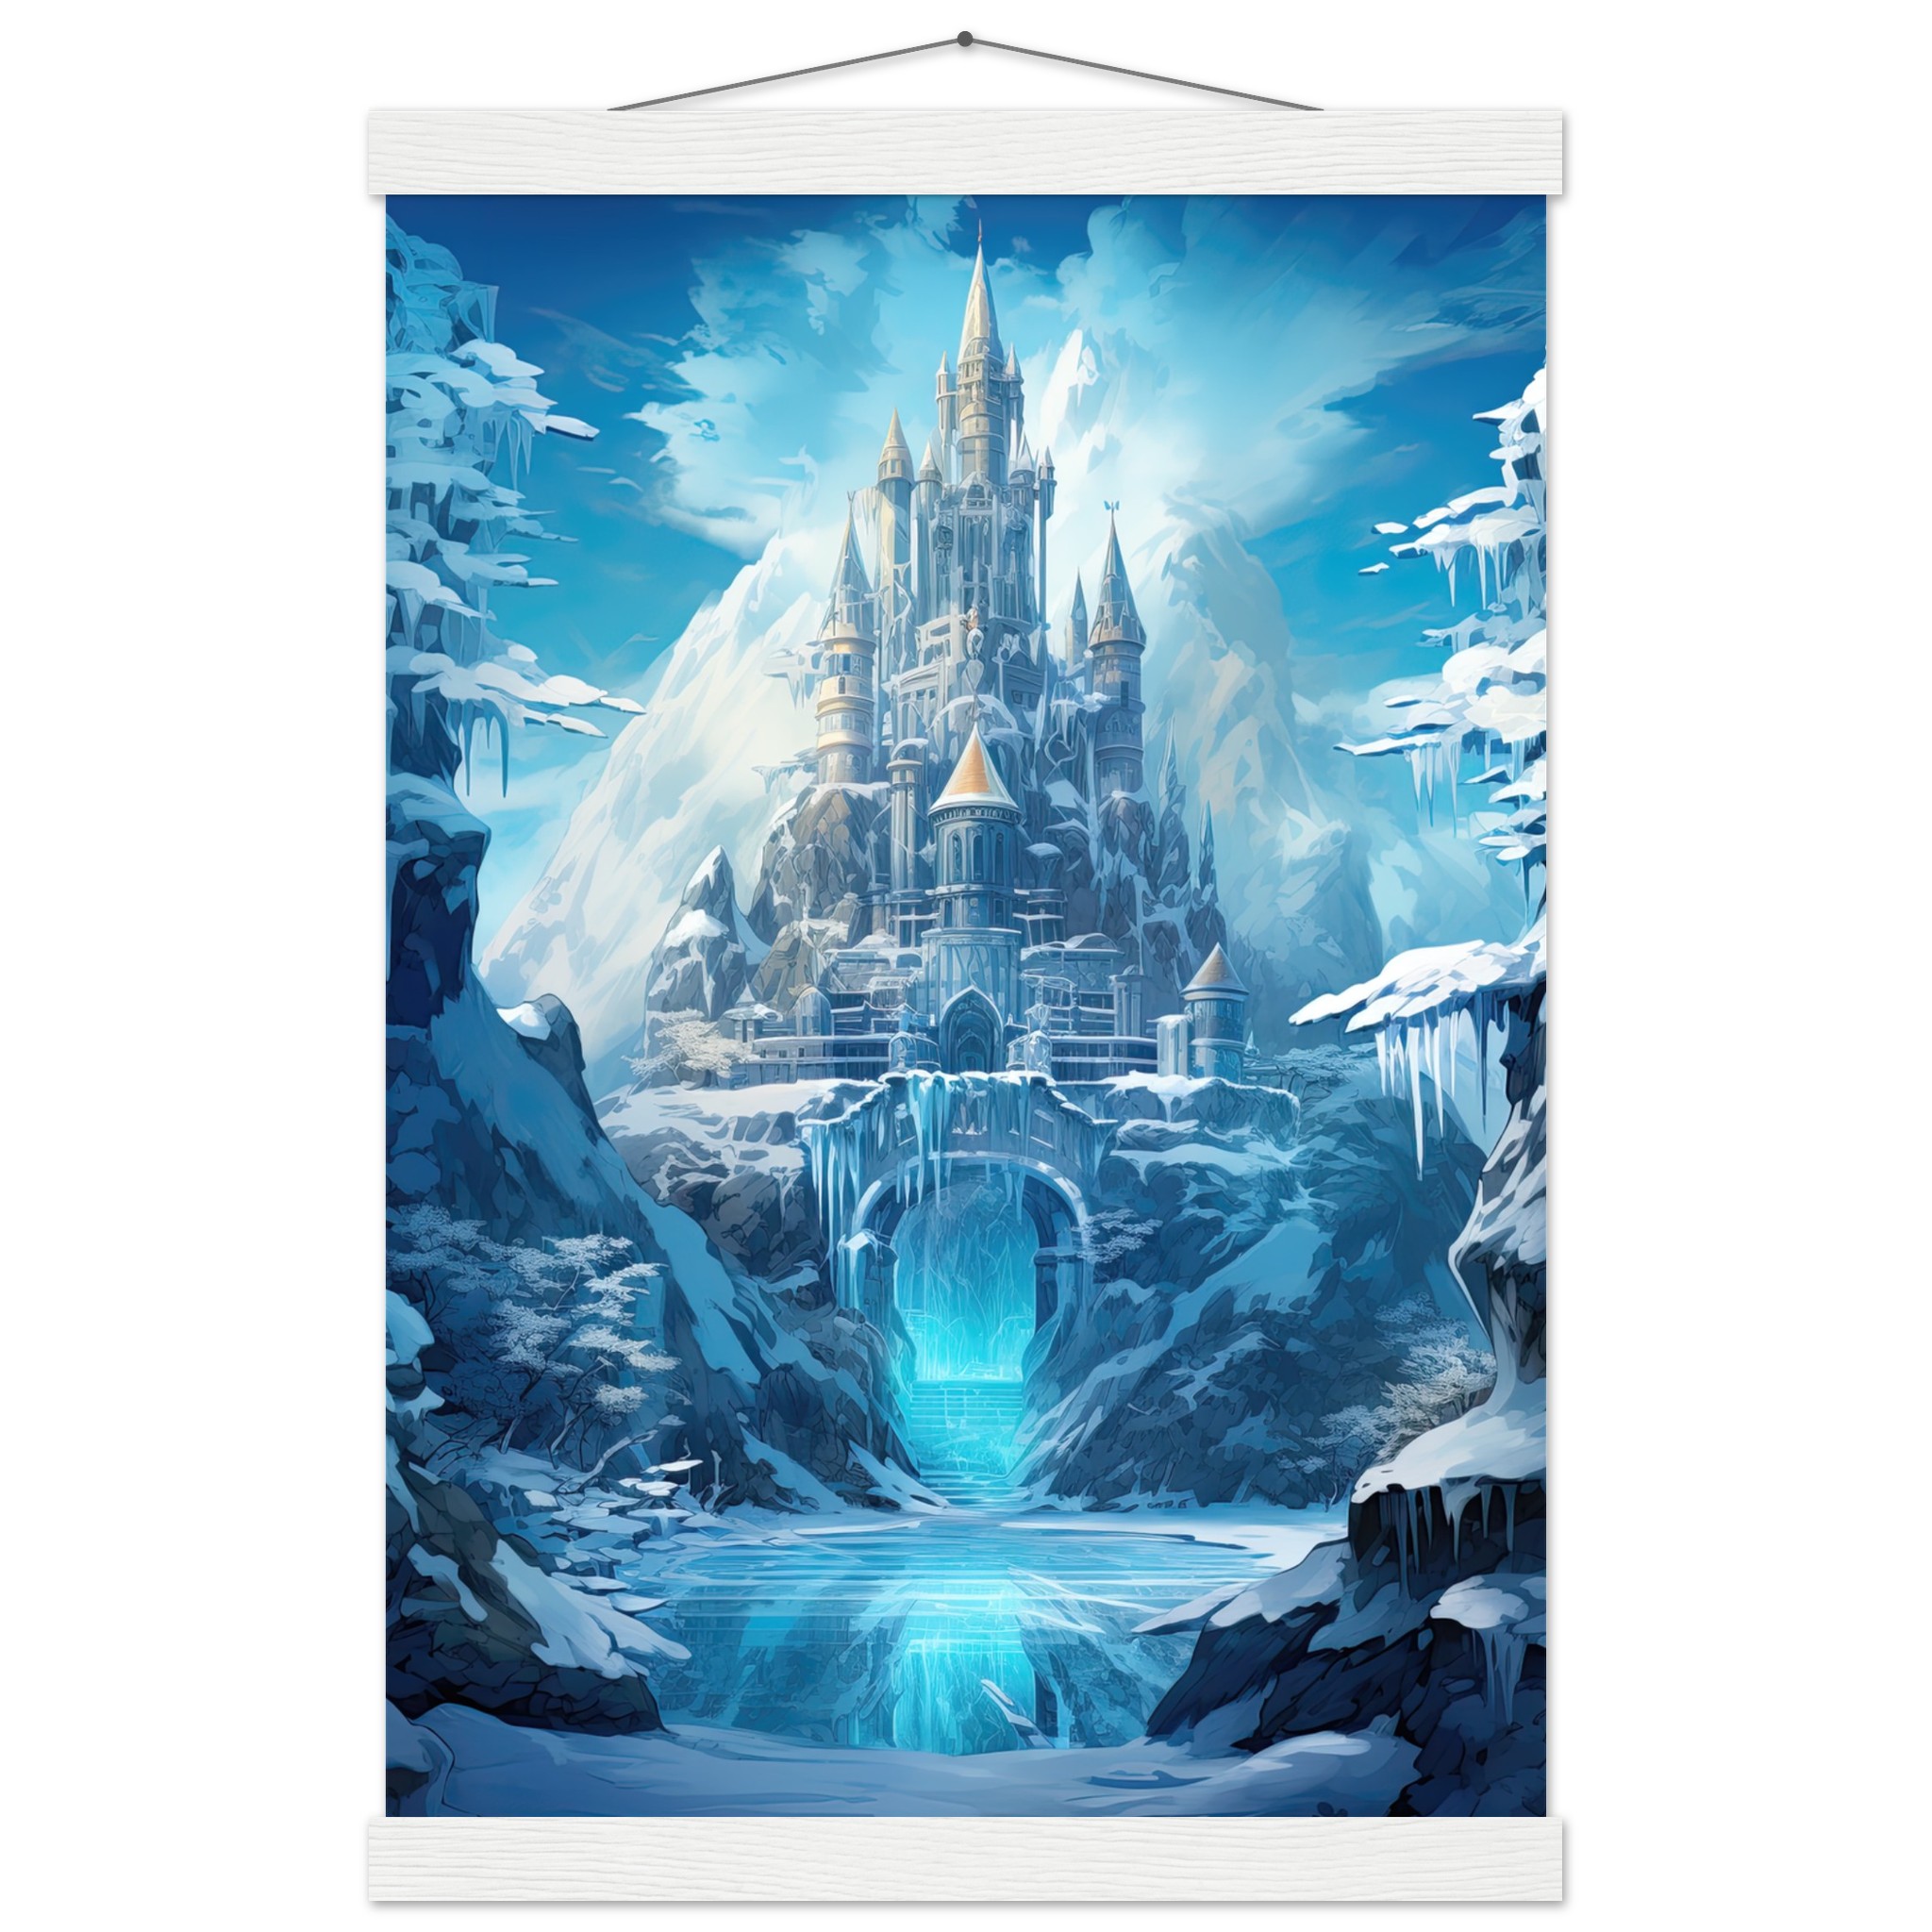 Frozen Icebound Castle Hanging Print – 30×45 cm / 12×18″, White wall hanger